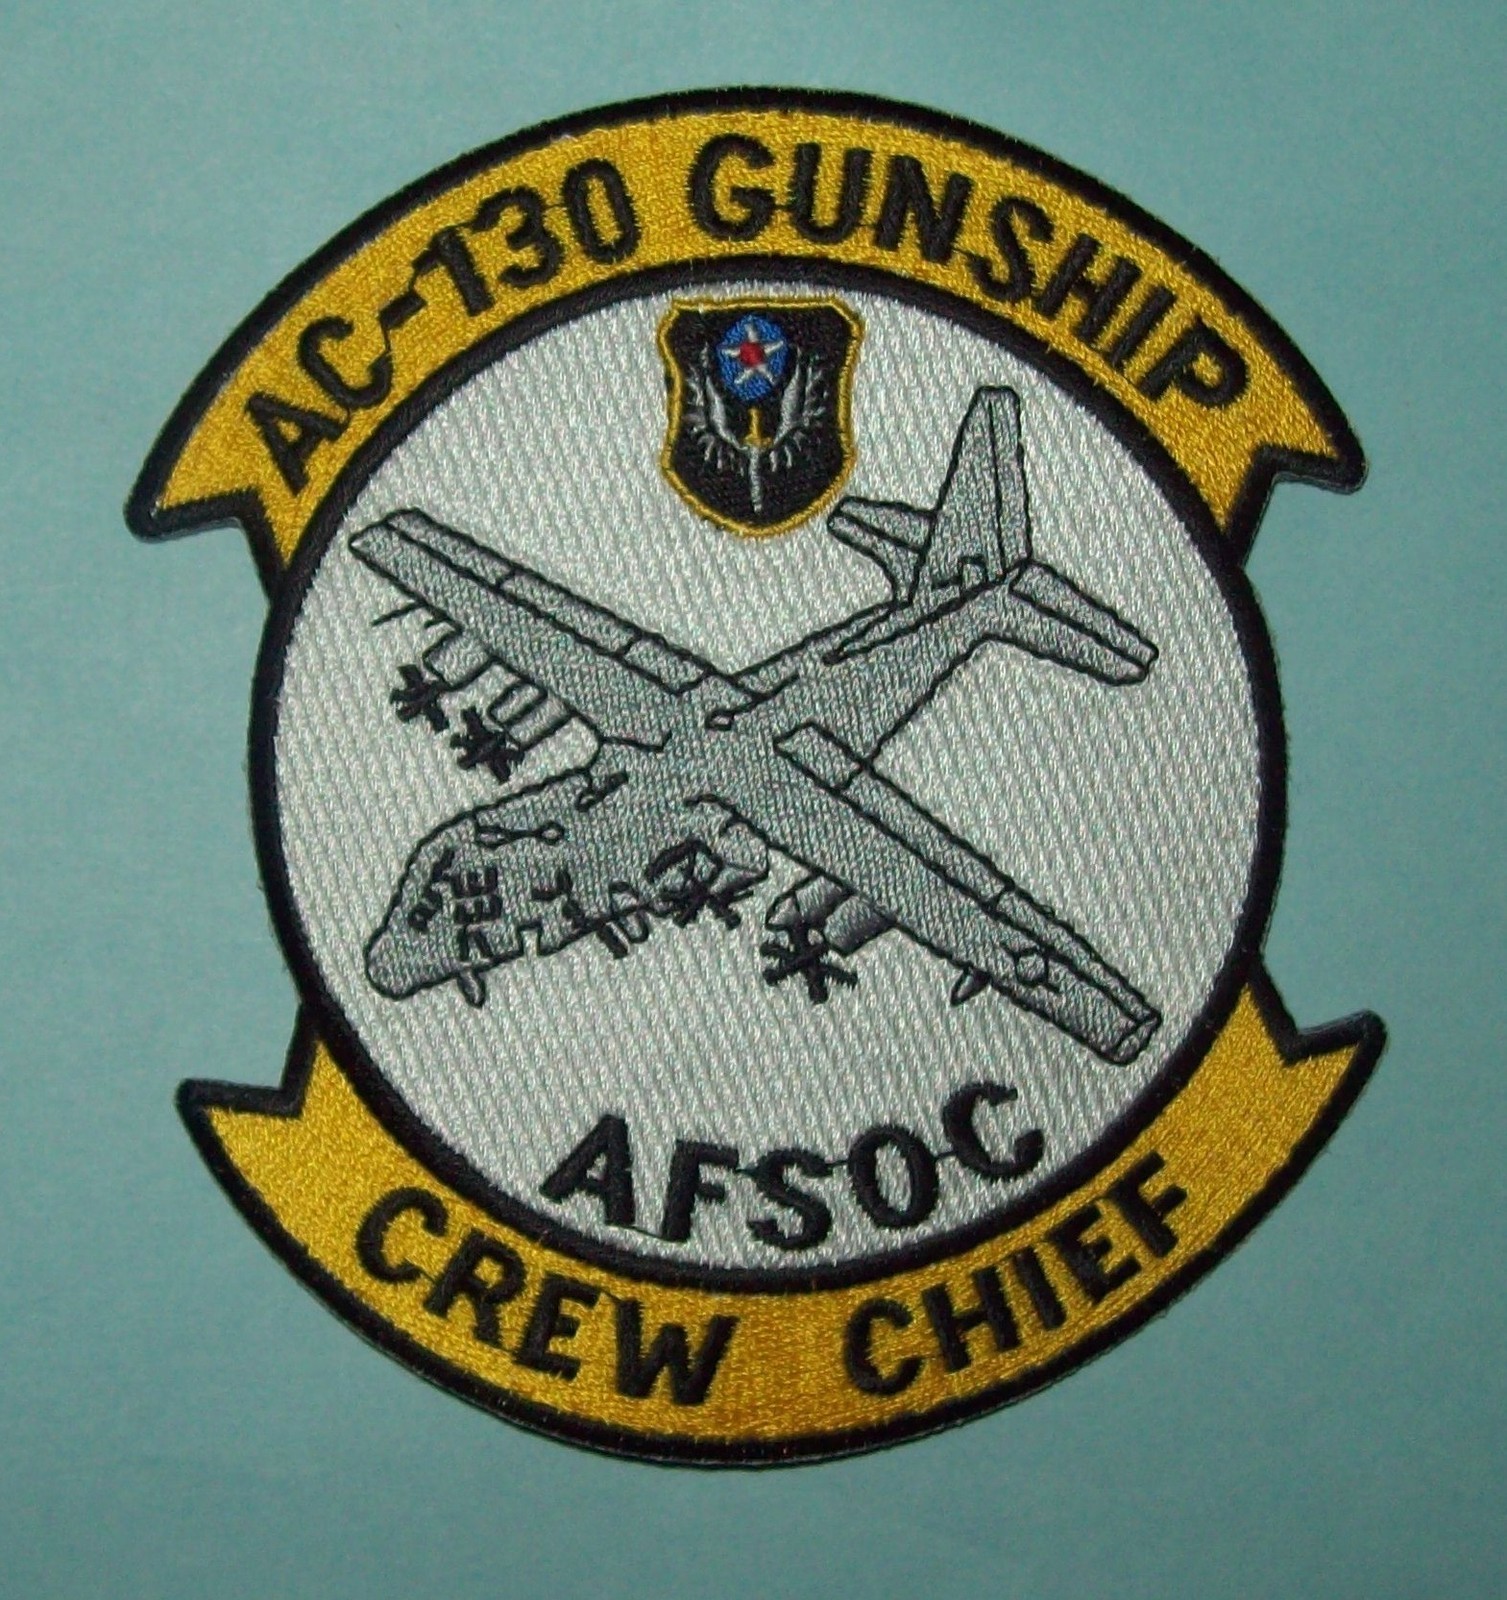 what was the air force gunship nickname